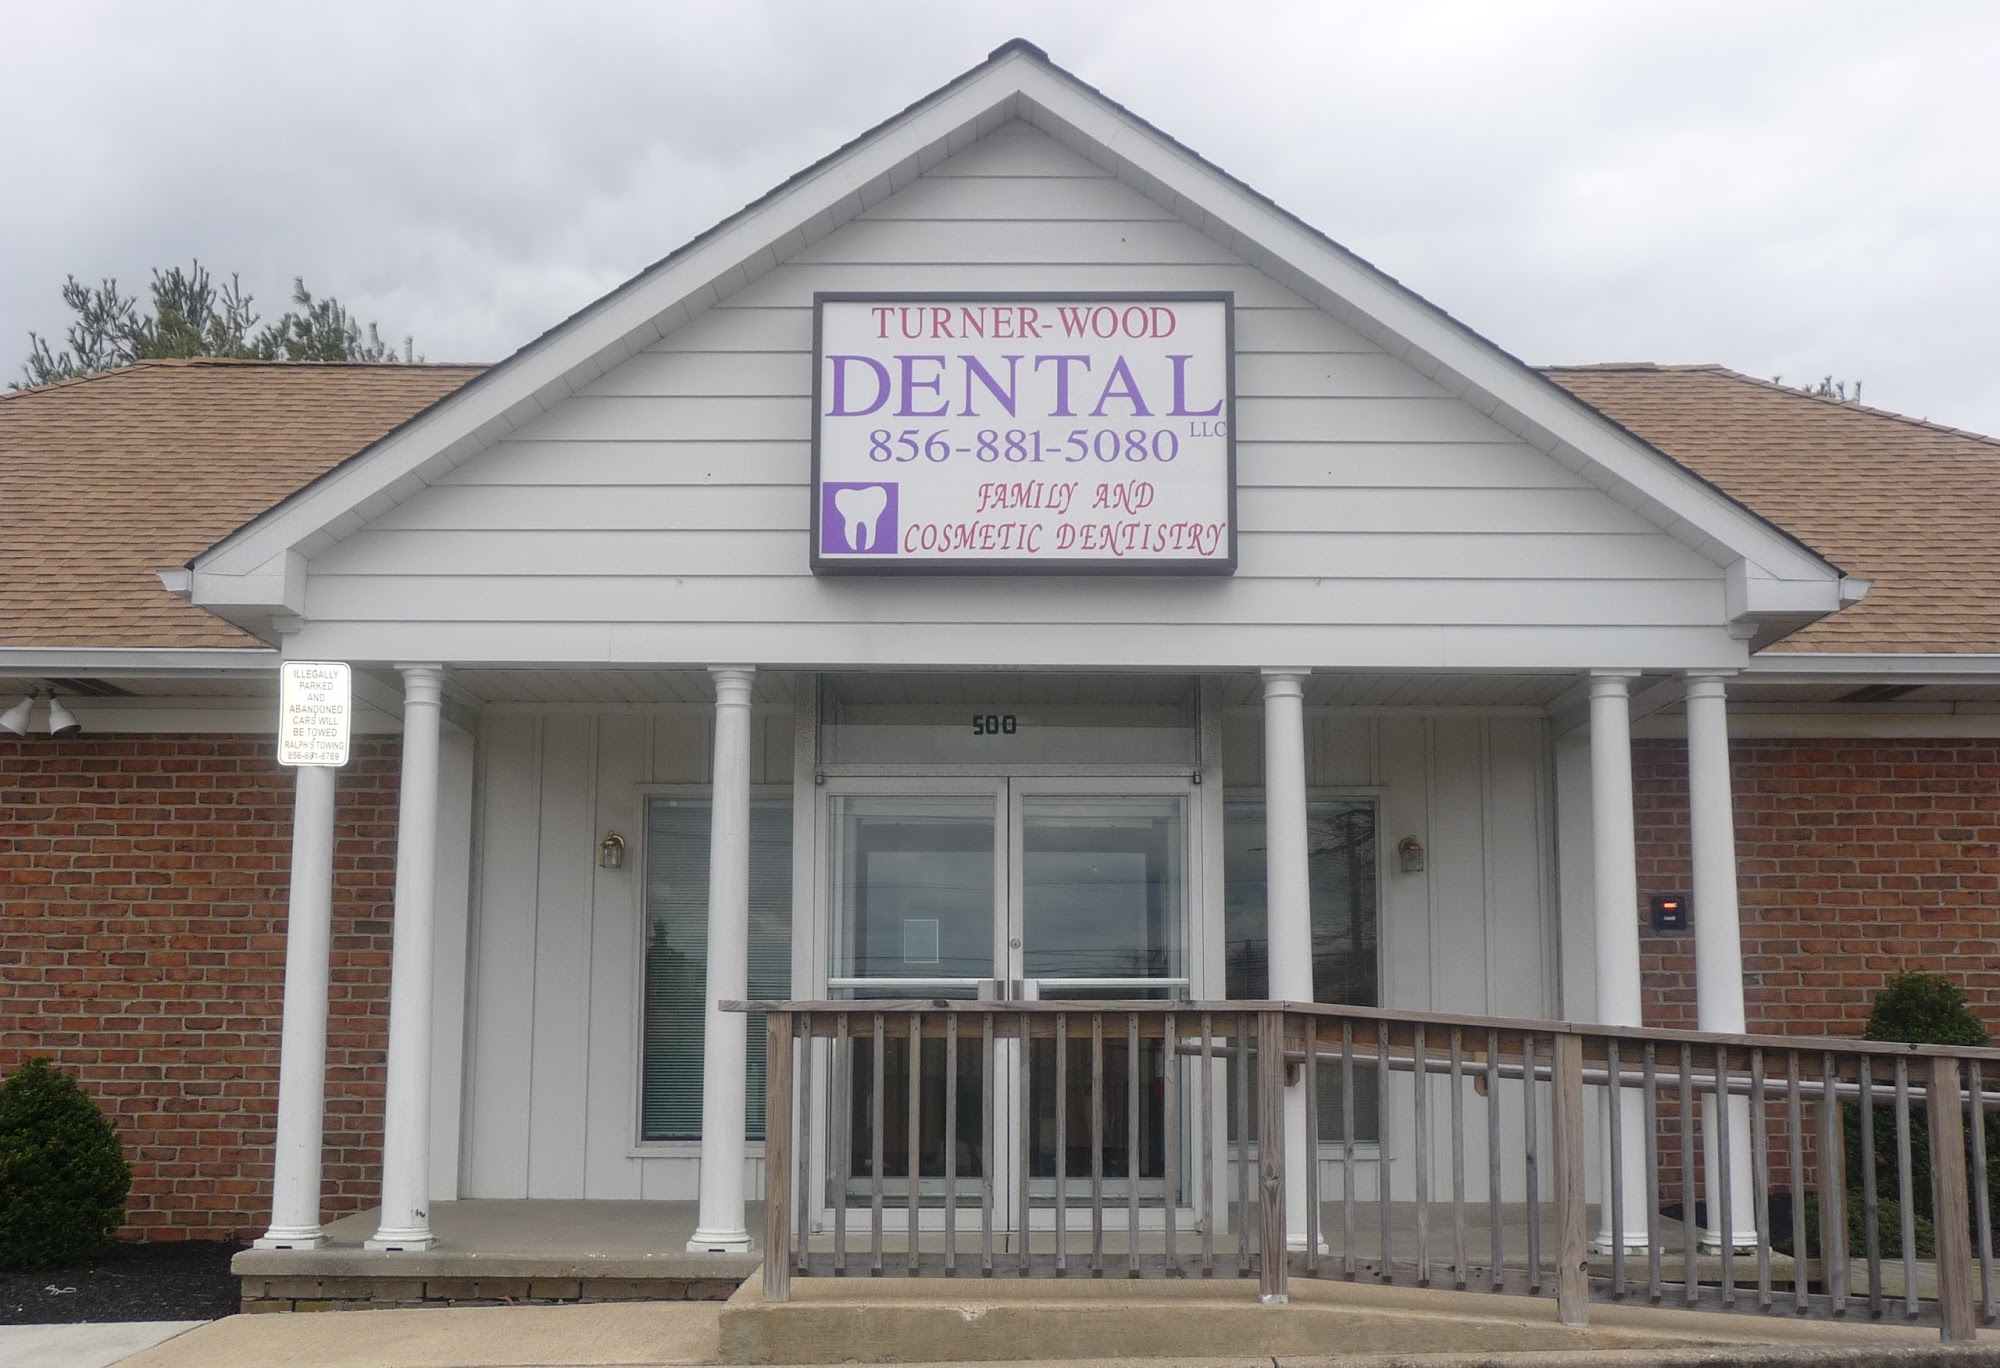 Turner-Wood Dental, LLC